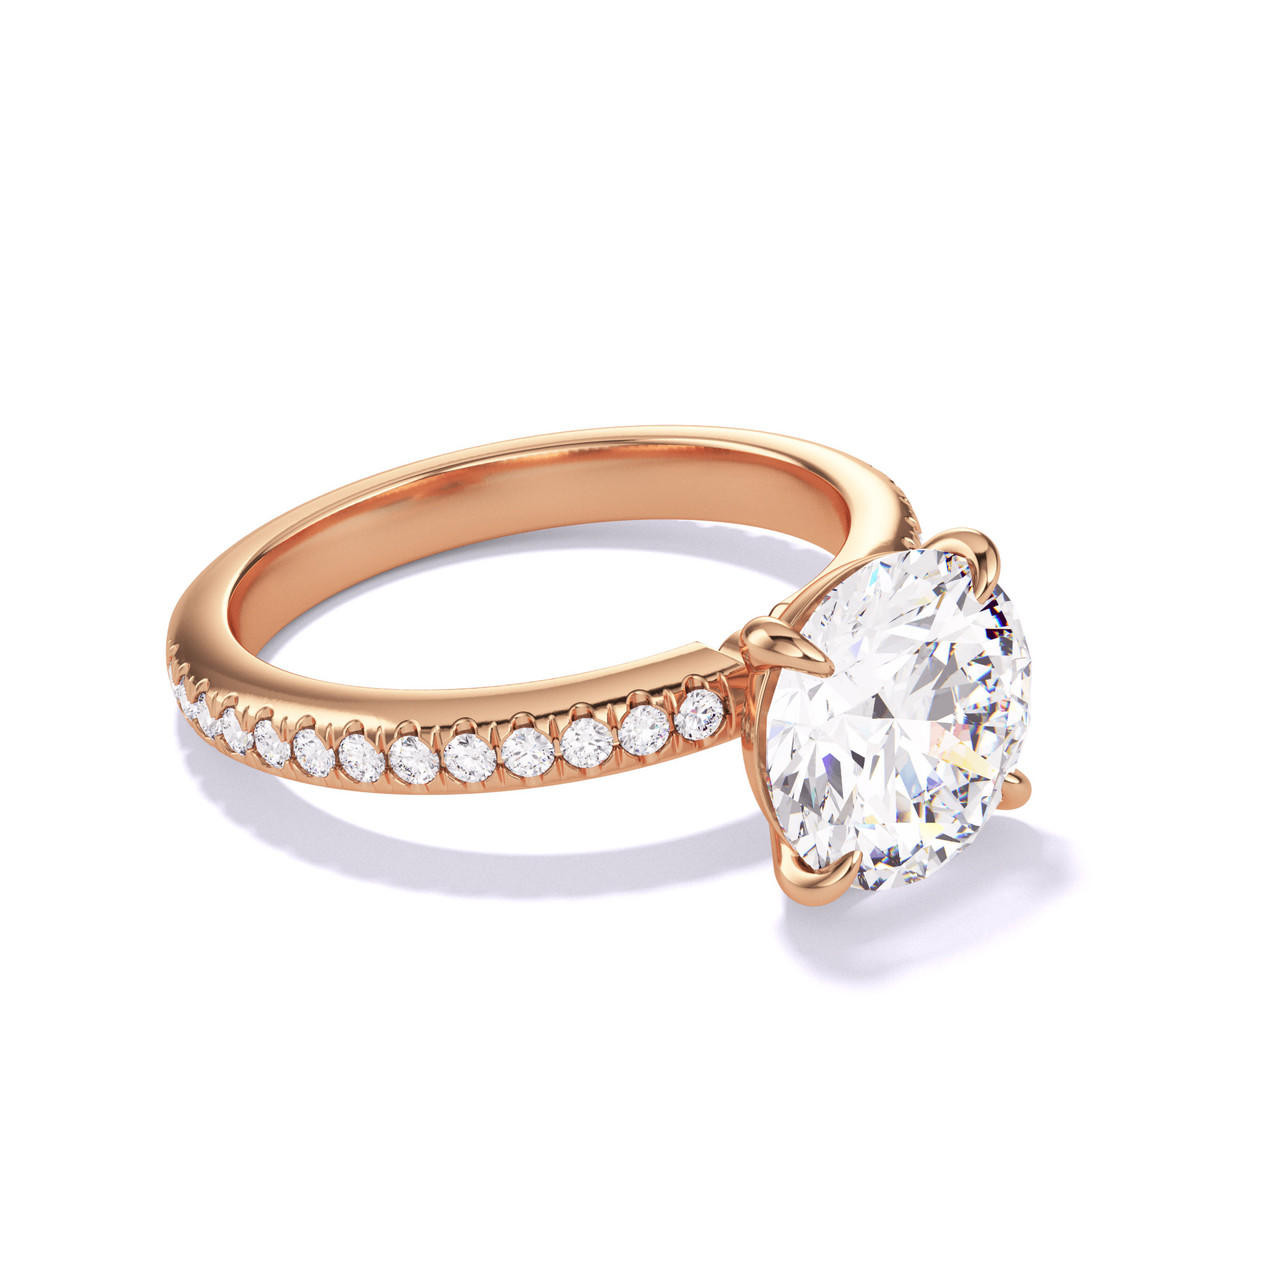 Gorgeous Diamond Pave' Heart Ring, set with 59 round diamonds!